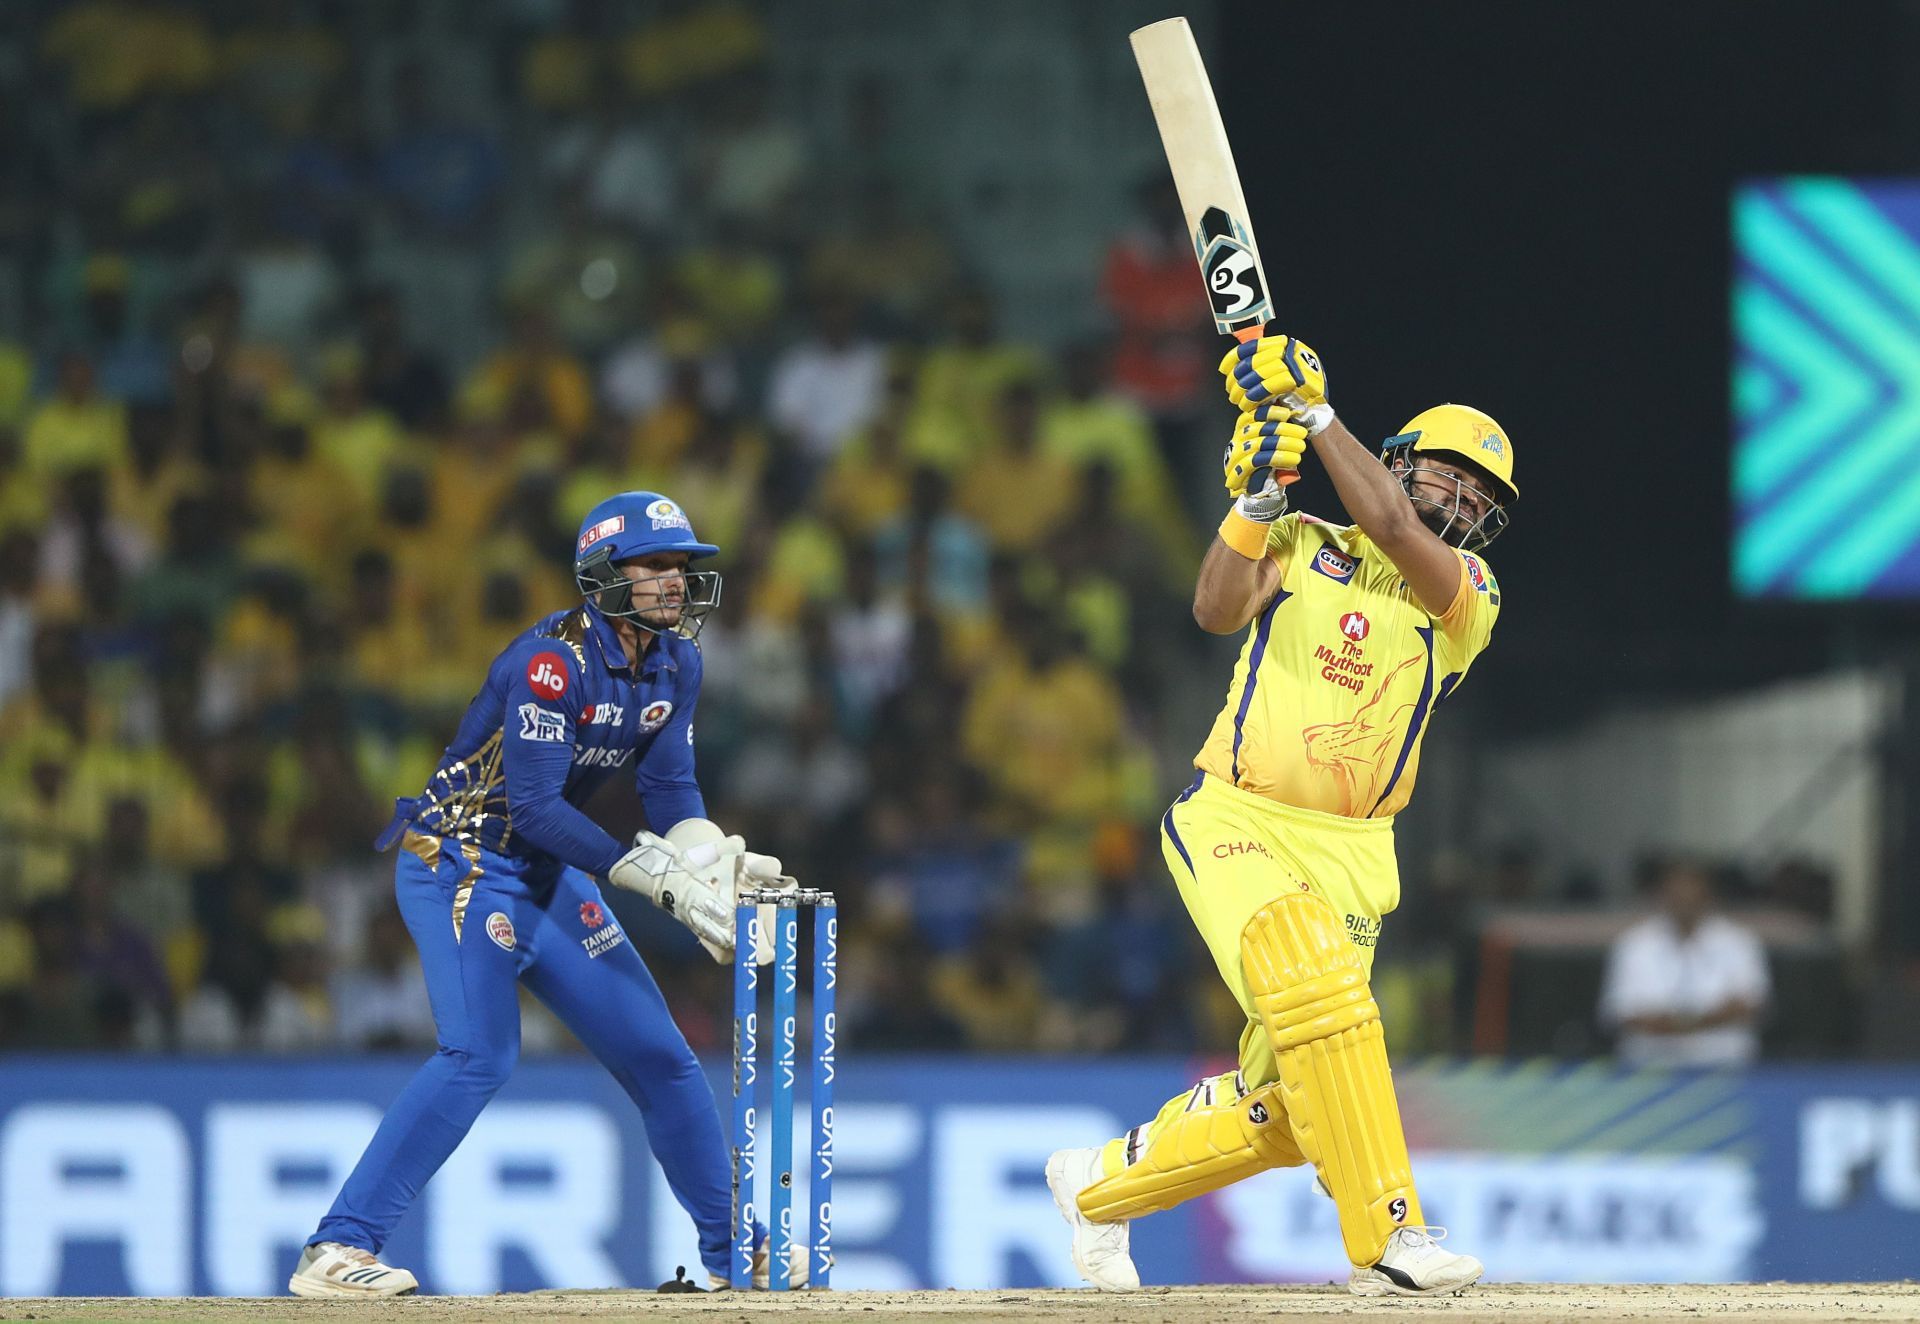 Suresh Raina batting in the IPL. Pic: Getty Images